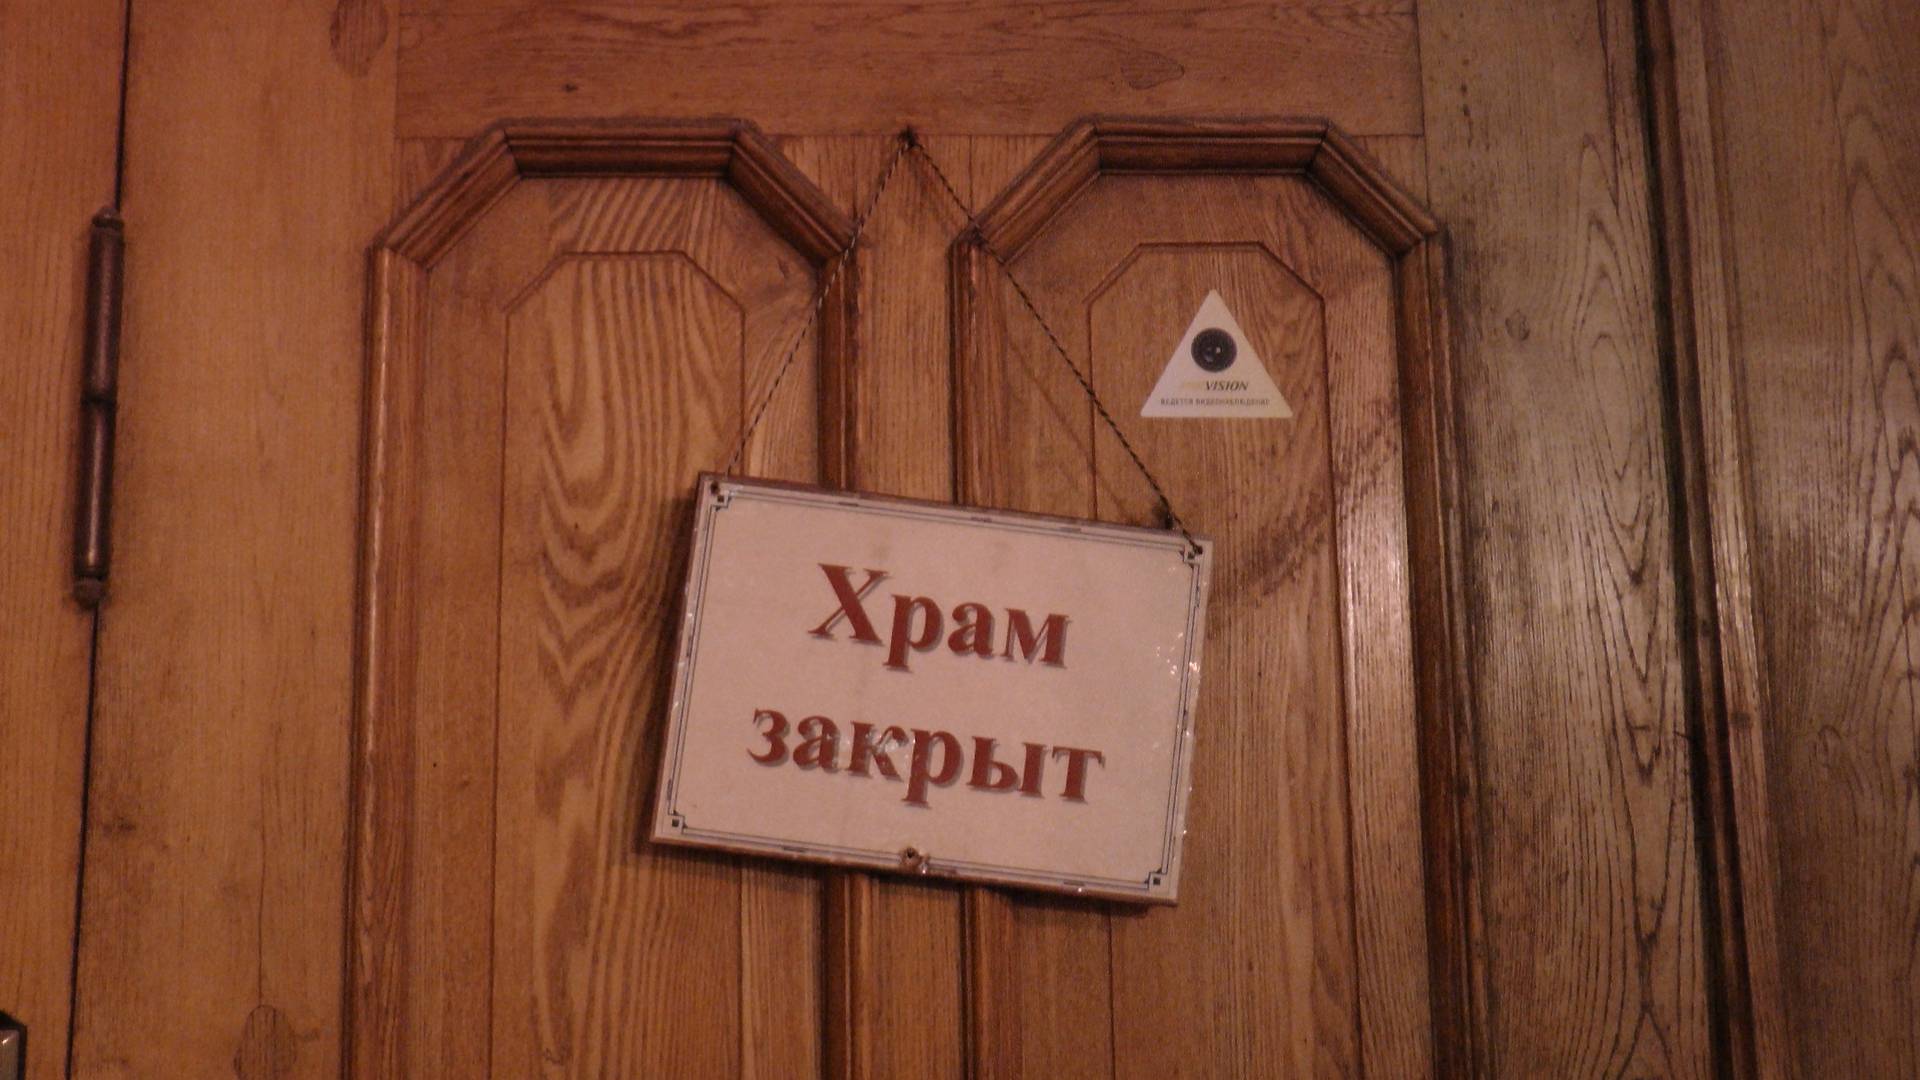 Храм закрыт. Табличка. Москва. 2018